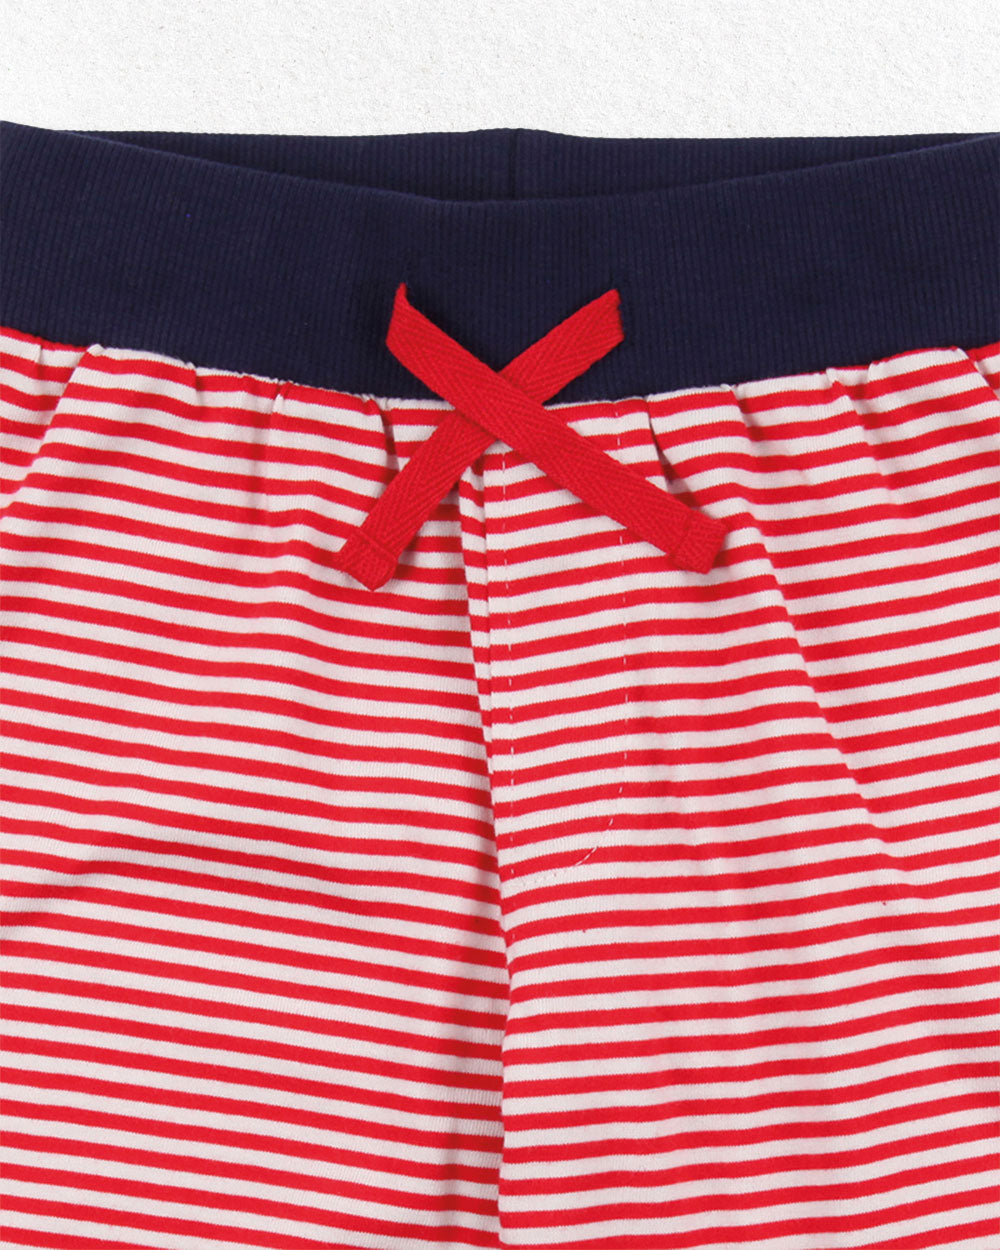 Happy Ice & Stripe Shorts - 2 Pack